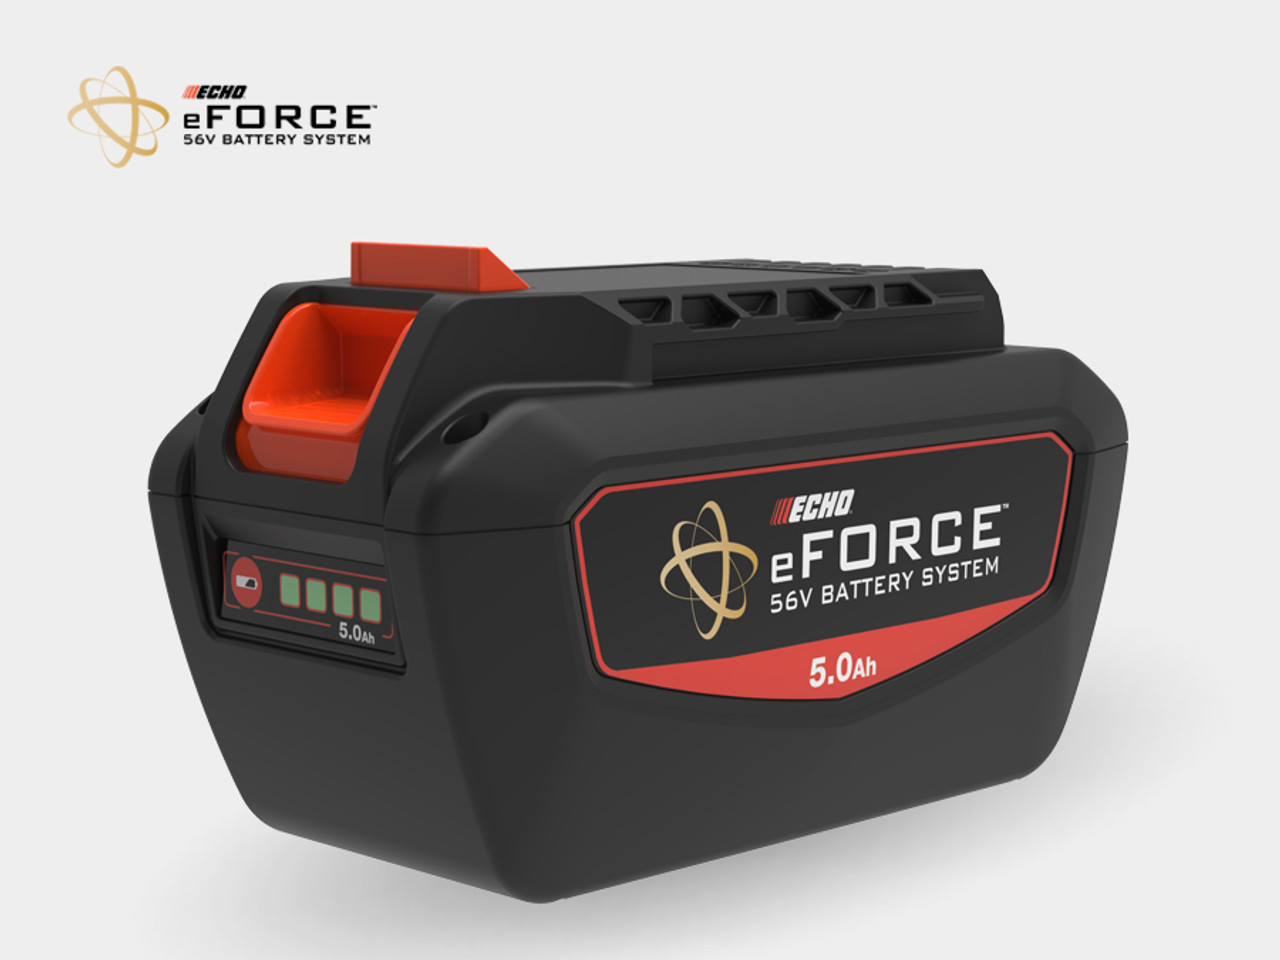 Echo Eforce 5.0Ah Lithium-Ion Battery